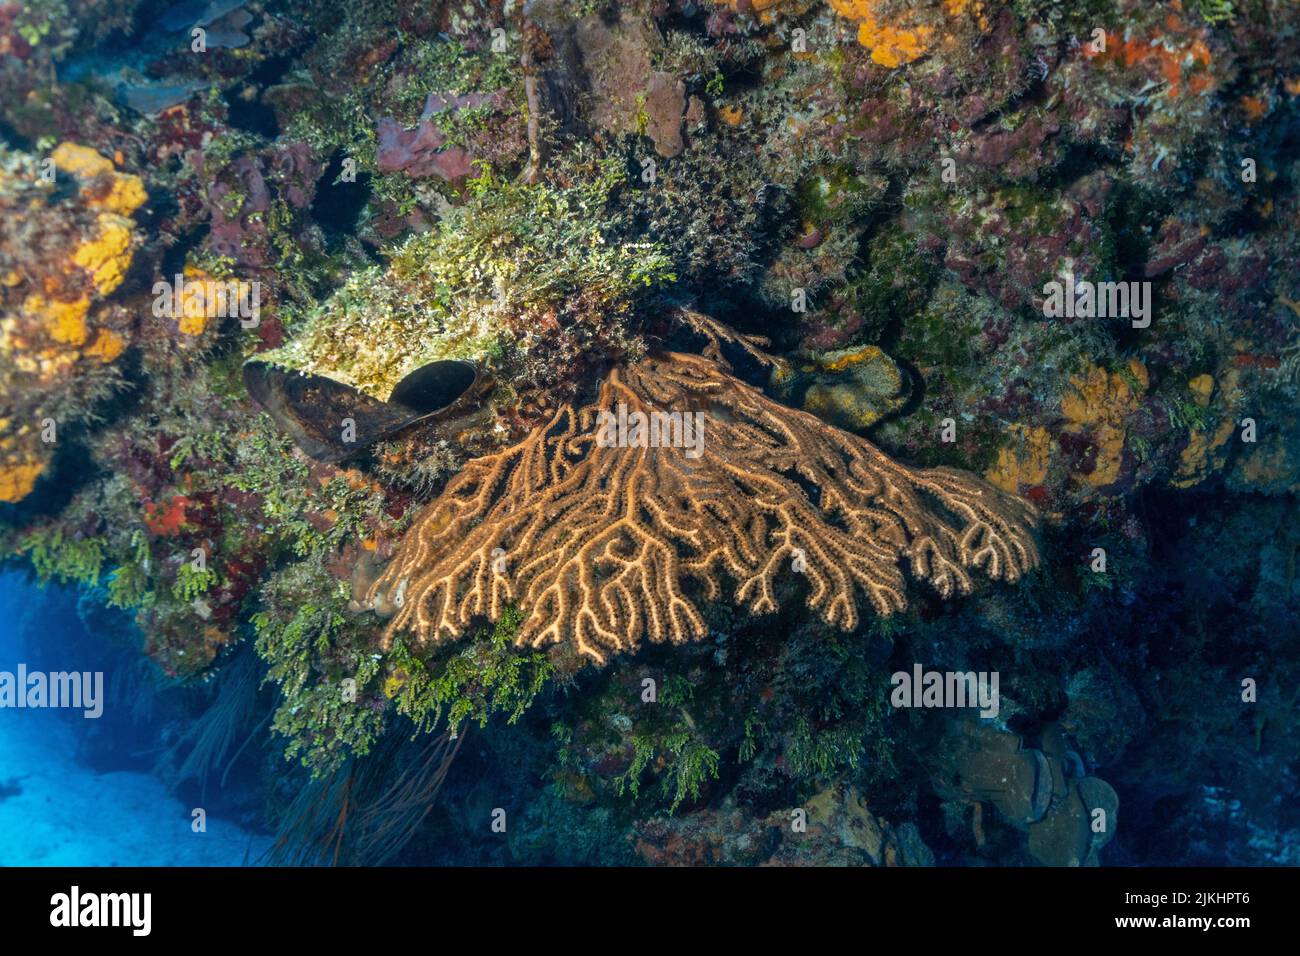 Beautiful Cozumel Reef Scene with Sponges, Gargonians, Coral, fish, etc. Stock Photo